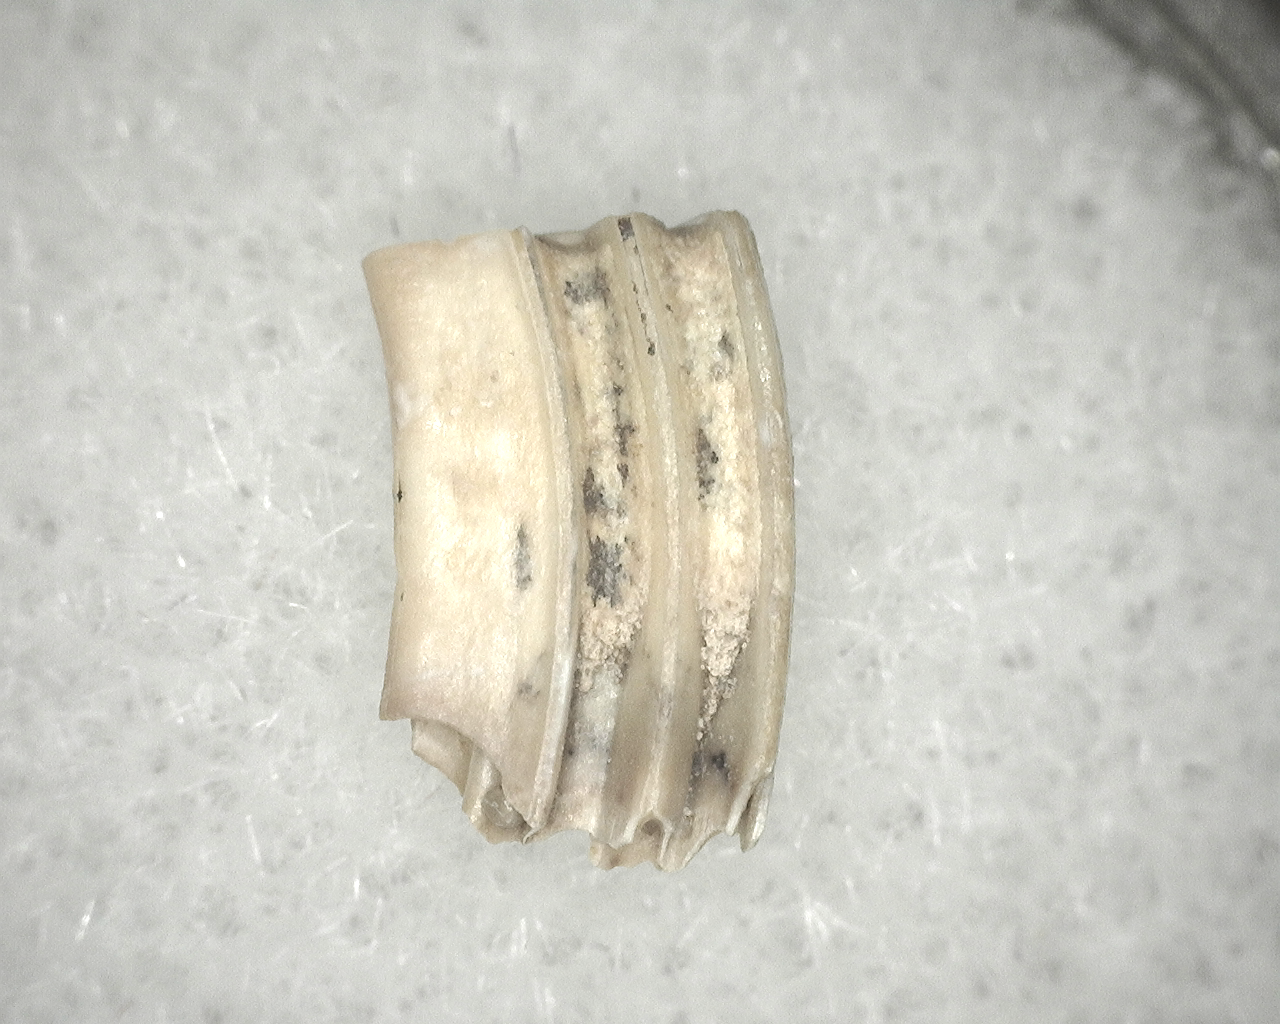 Genuine Fossil Pleistocene Neofiber Muskrat Tooth for Sale From Florida #13b